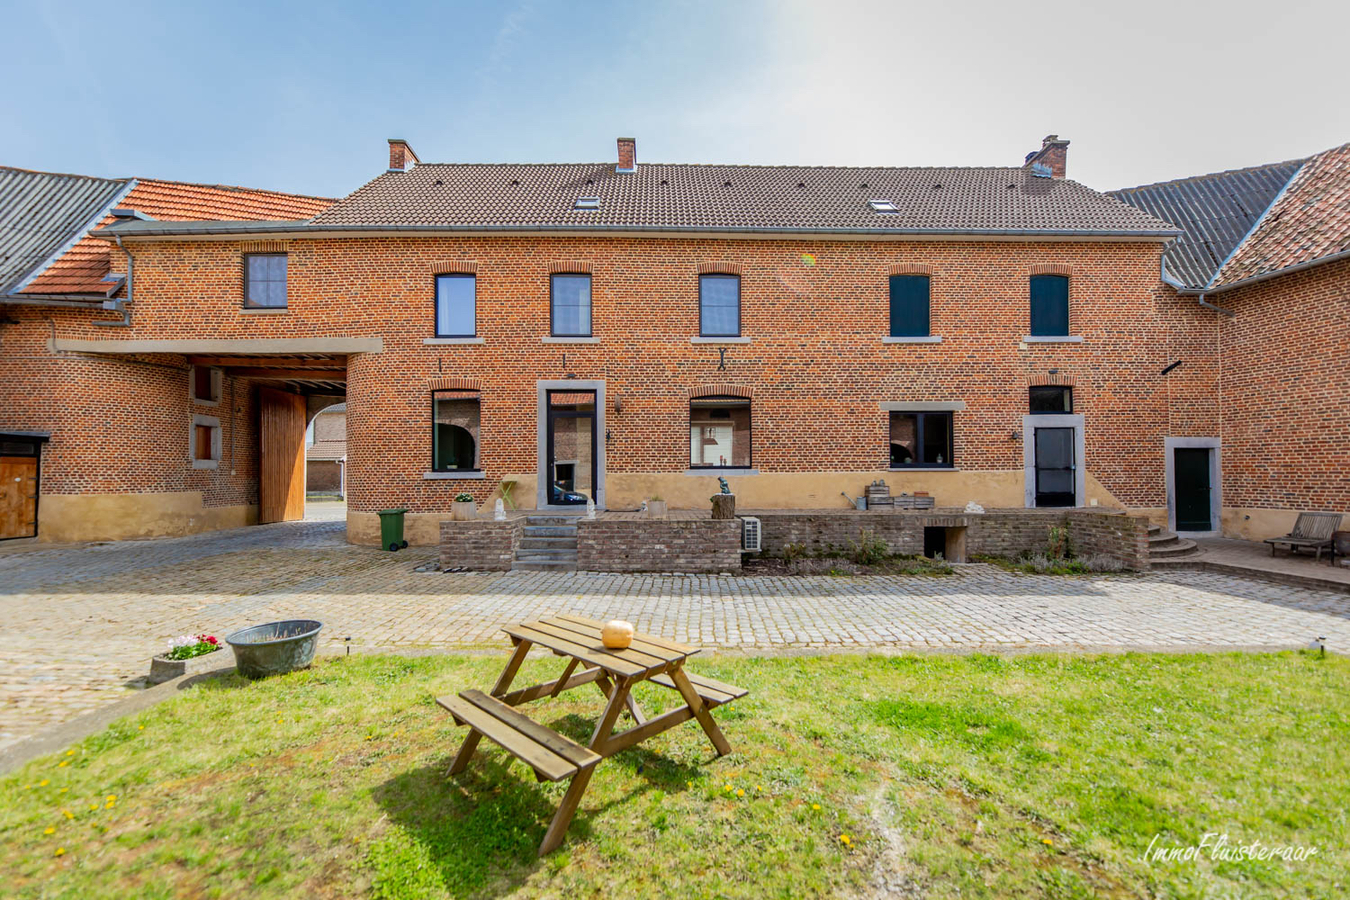 Property for sale in Sint-Truiden (3800)